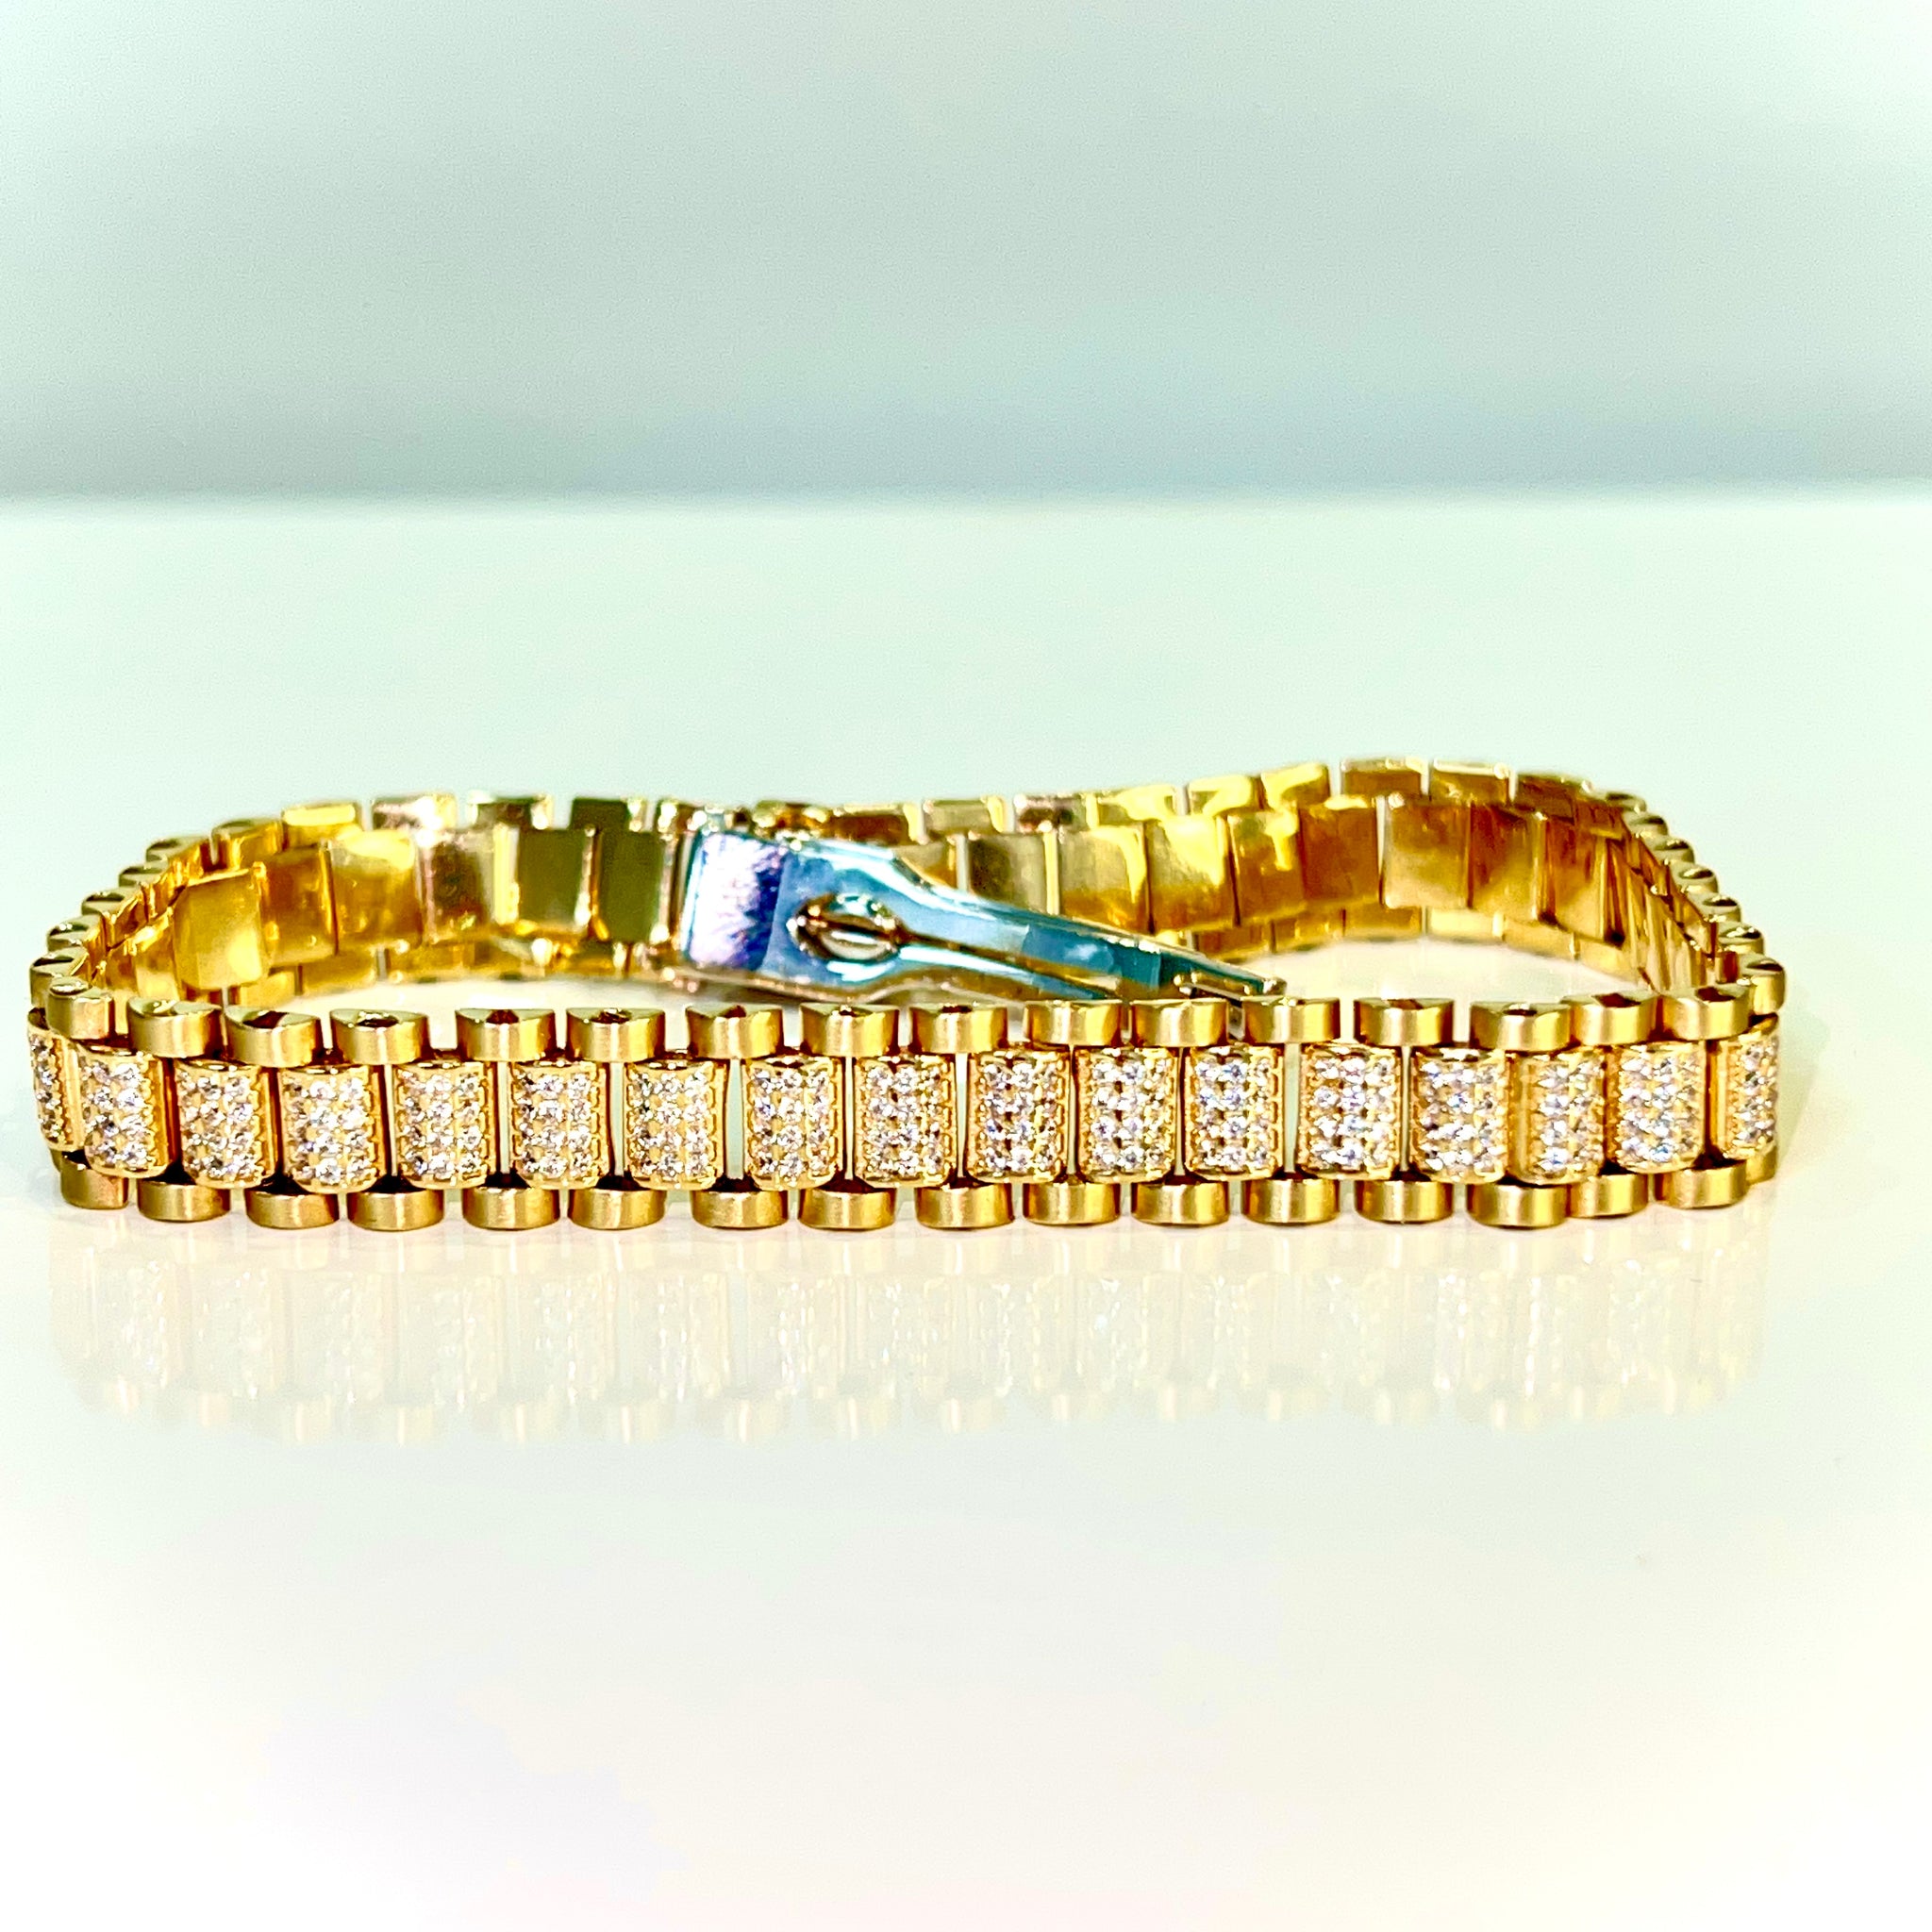 Bicolor Presidential Bracelet - 14 carat gold - 10mm